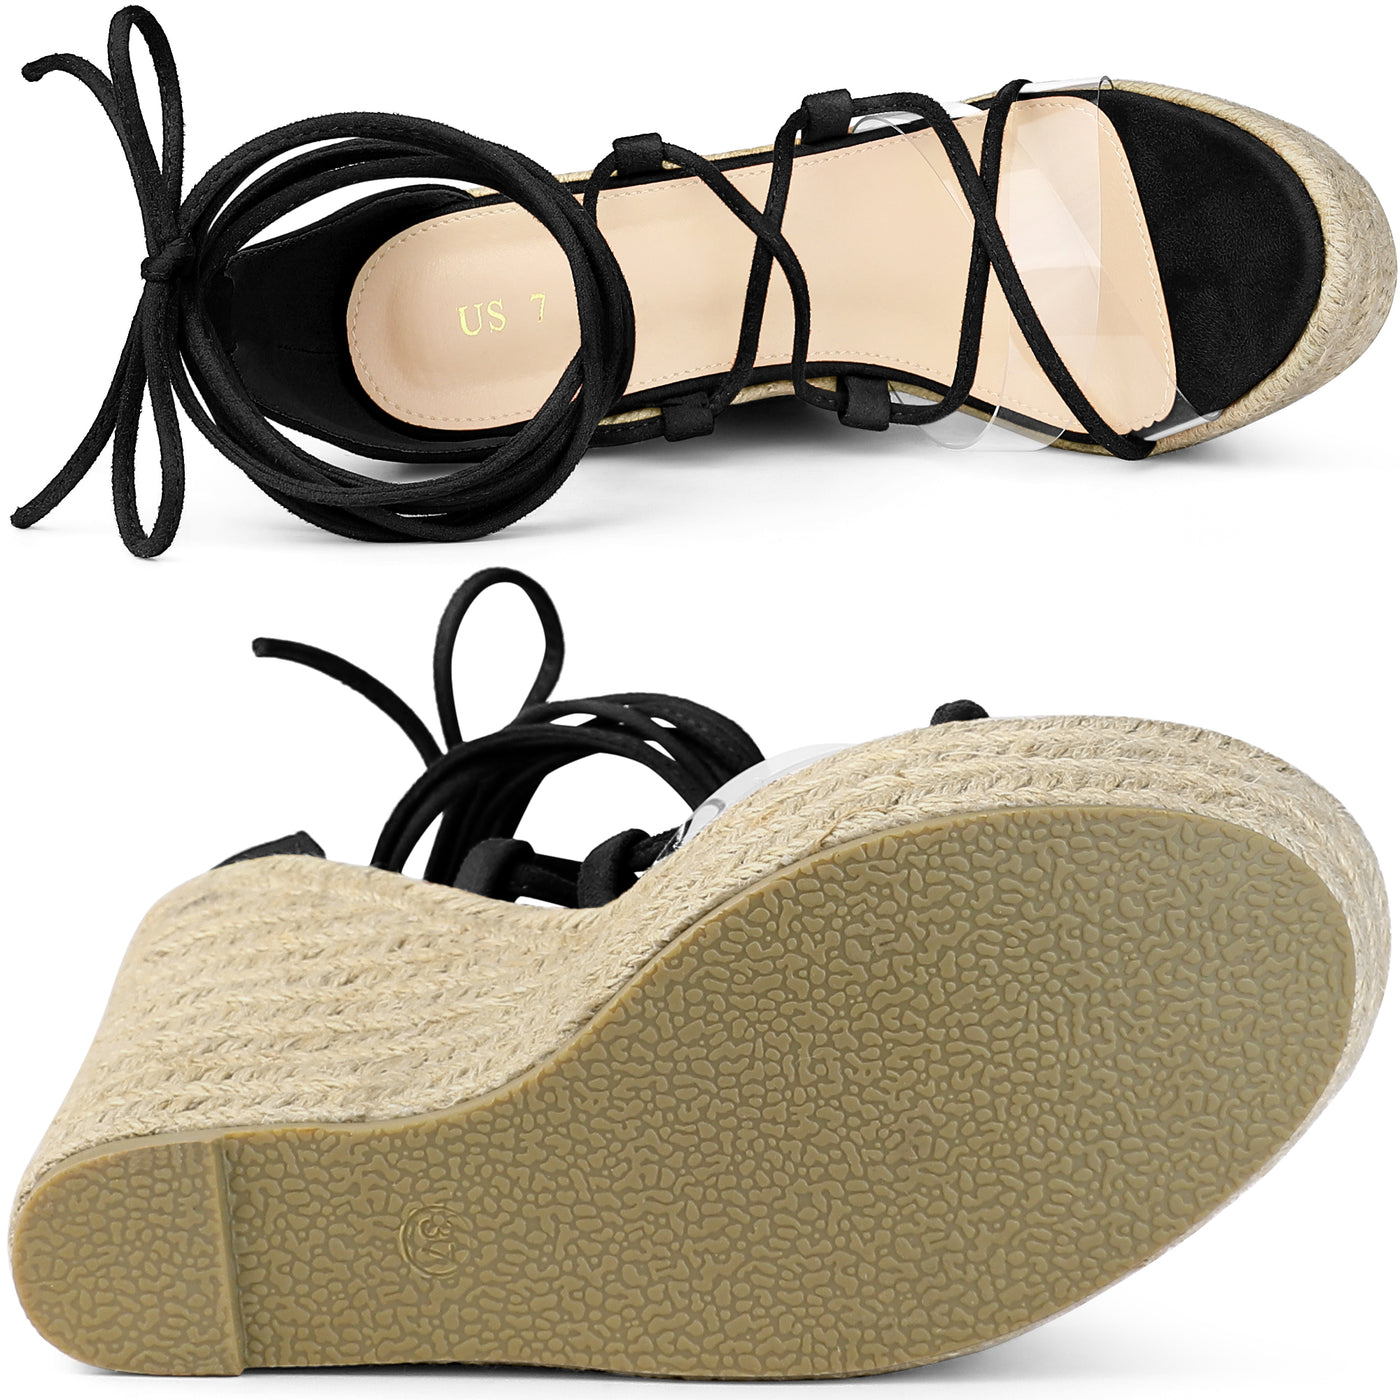 Allegra K Women's Platform Espadrilles Wedge Heel Transparent Straps Sandals